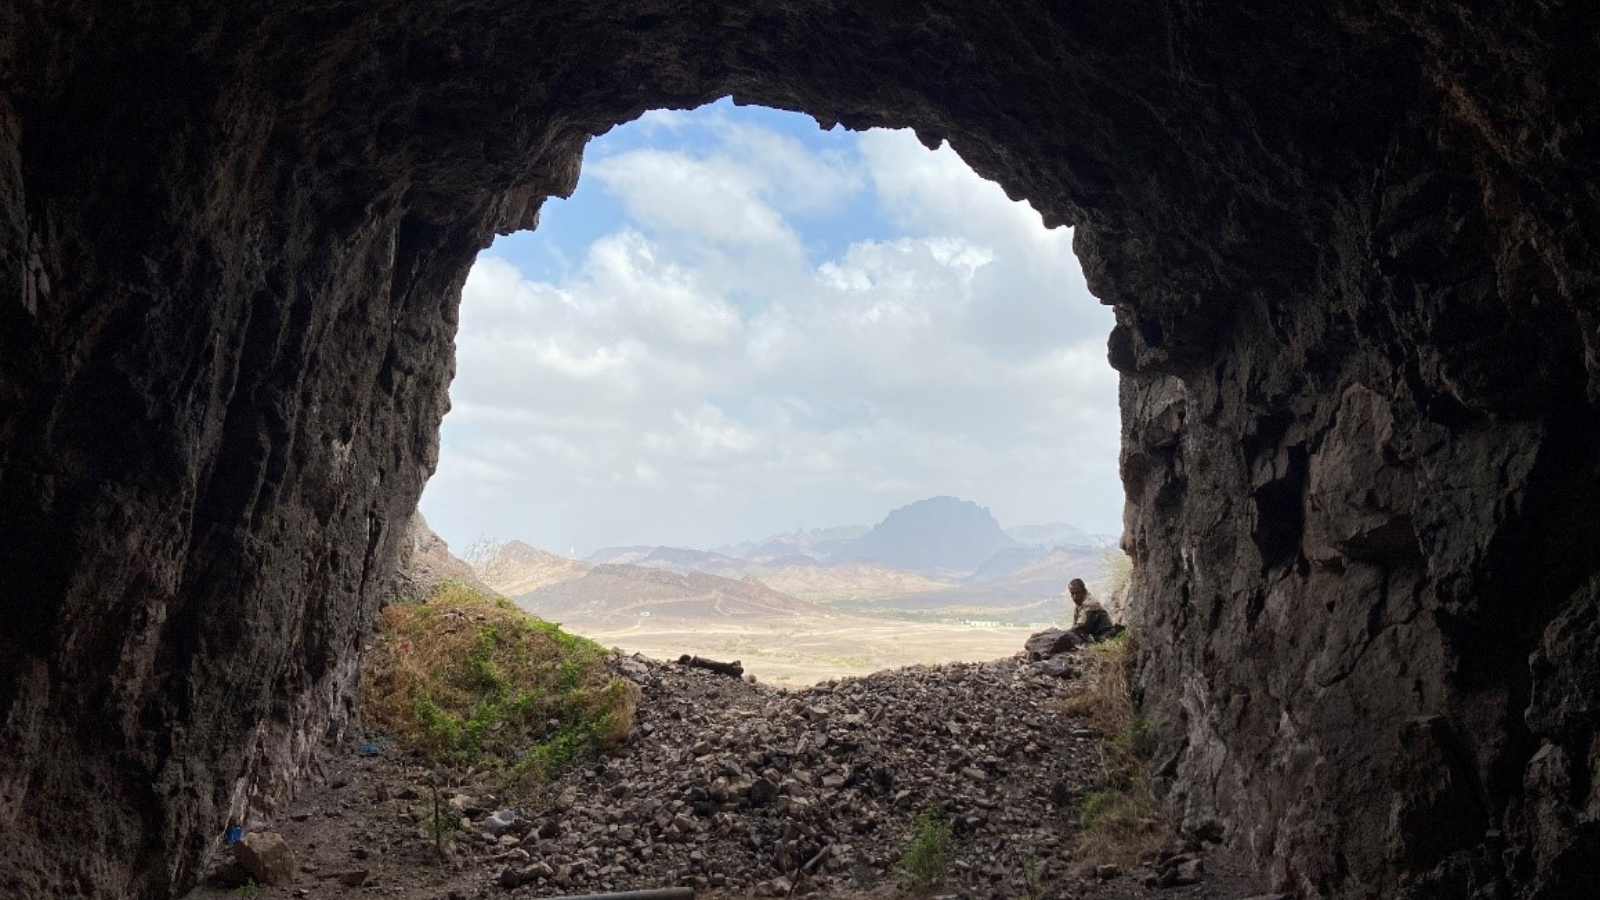 Battle area clearance in a tunnel near Labouza, Yemen. (Photo Courtesy of the HALO Trust)